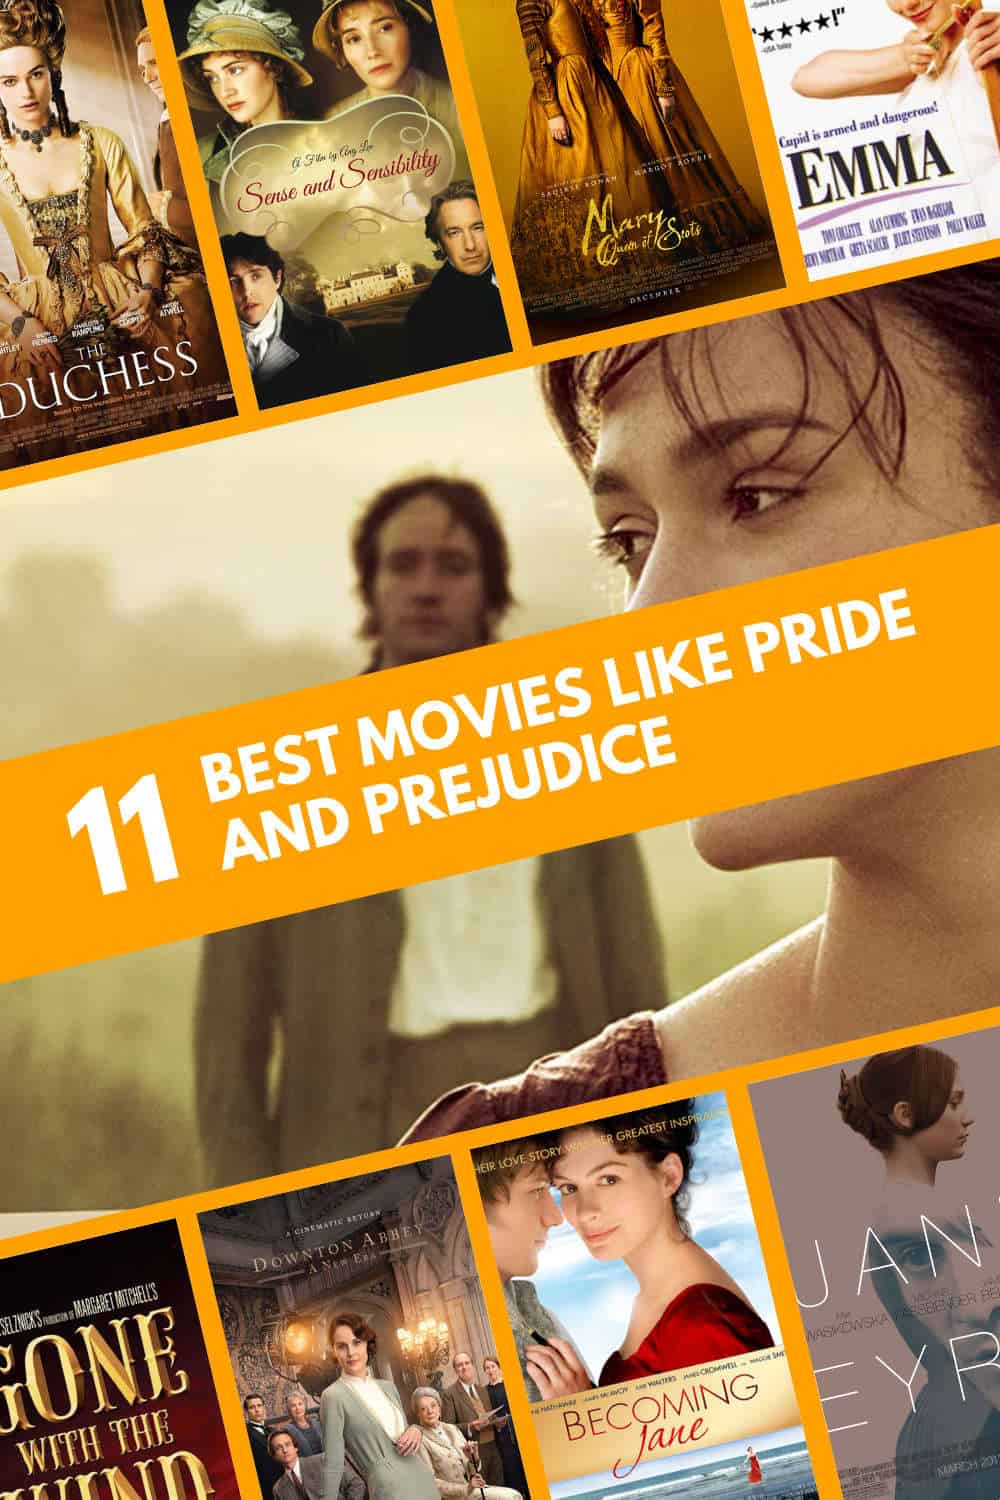 Movie like Pride and Prejudice